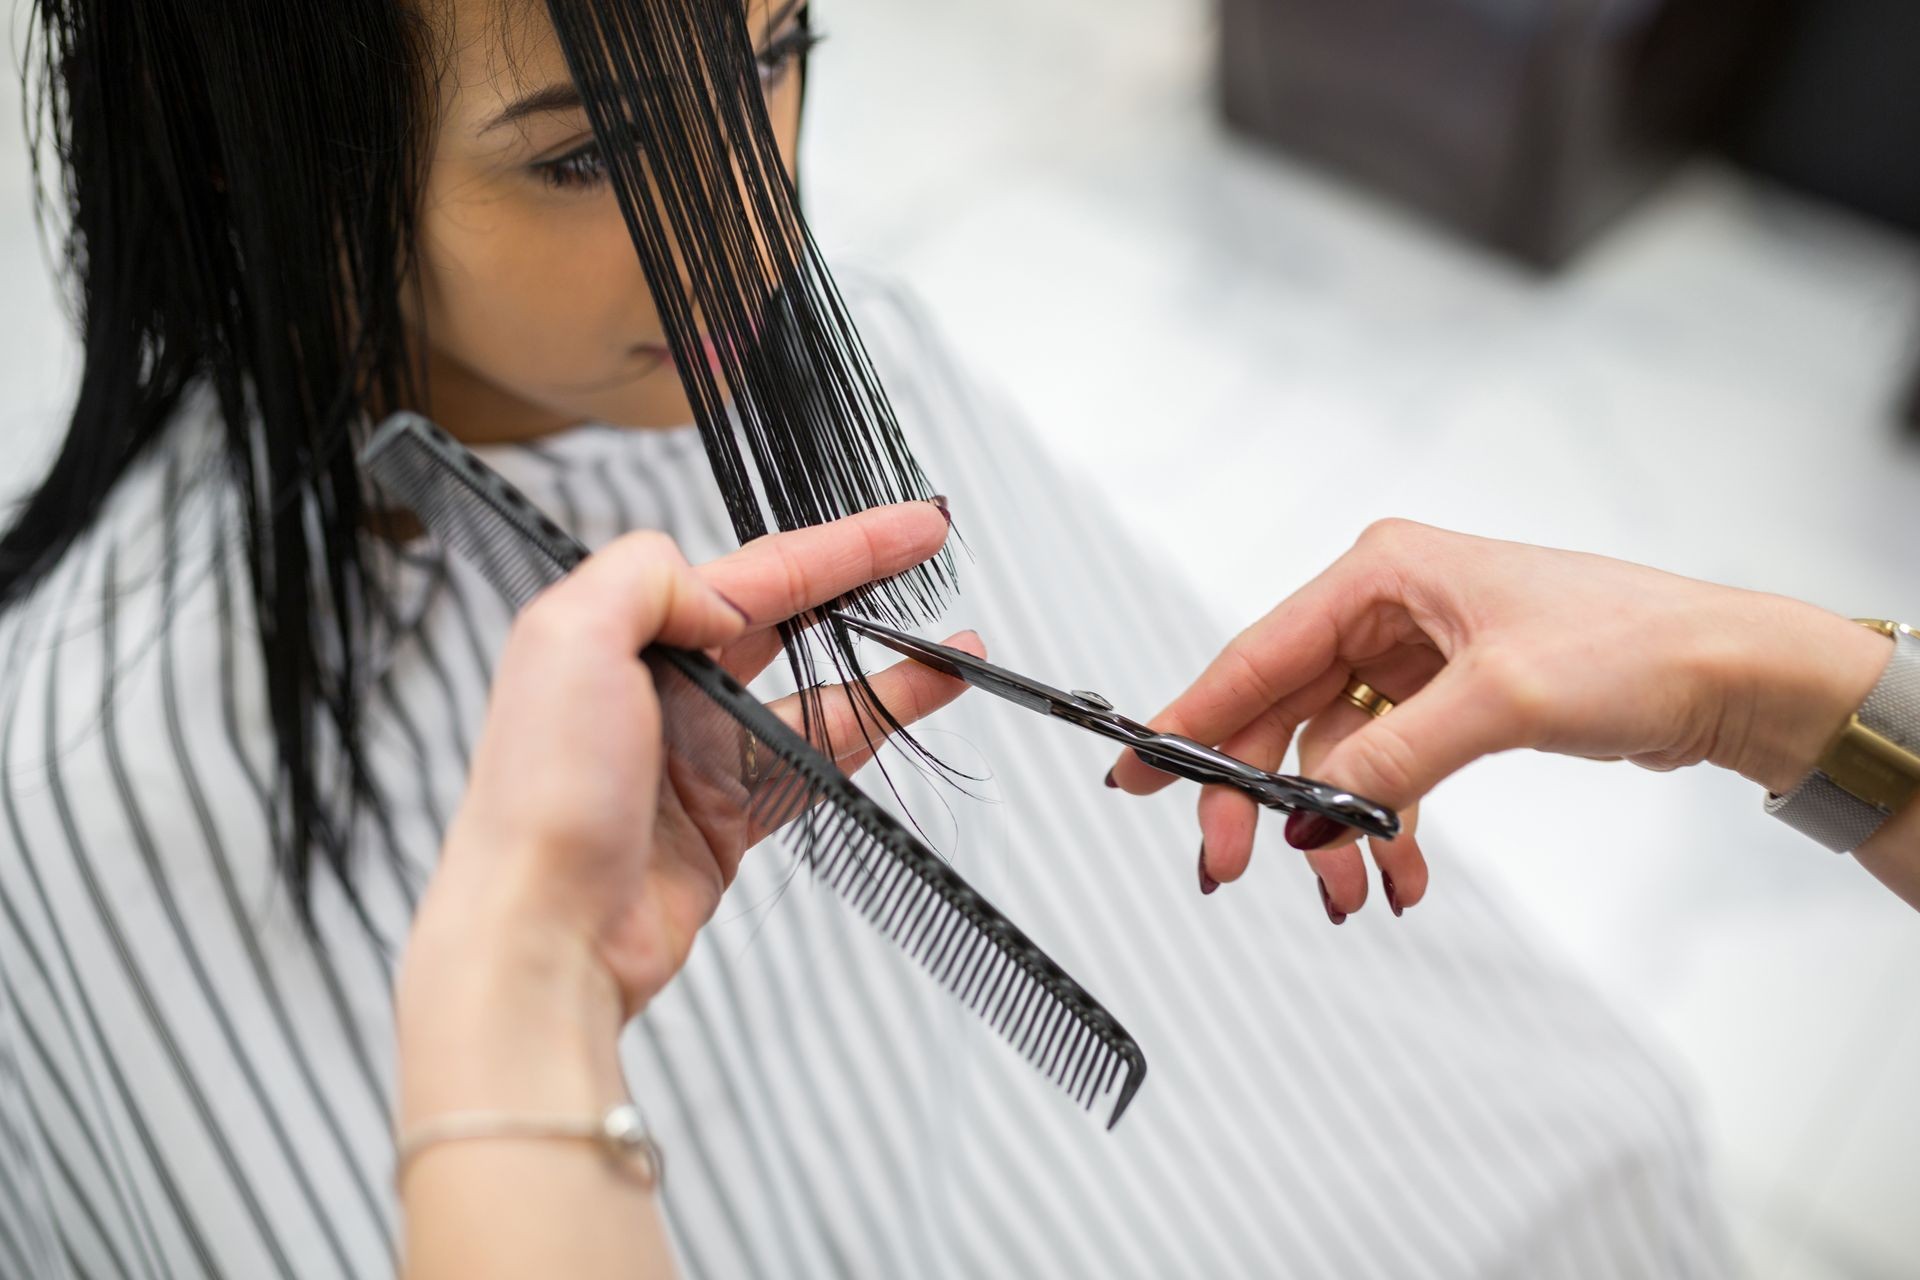 beauty scissors, scissor sharpening, scissor repair, grooming scissors, salon scissors, hairdresser, Black hair woman having hair cut